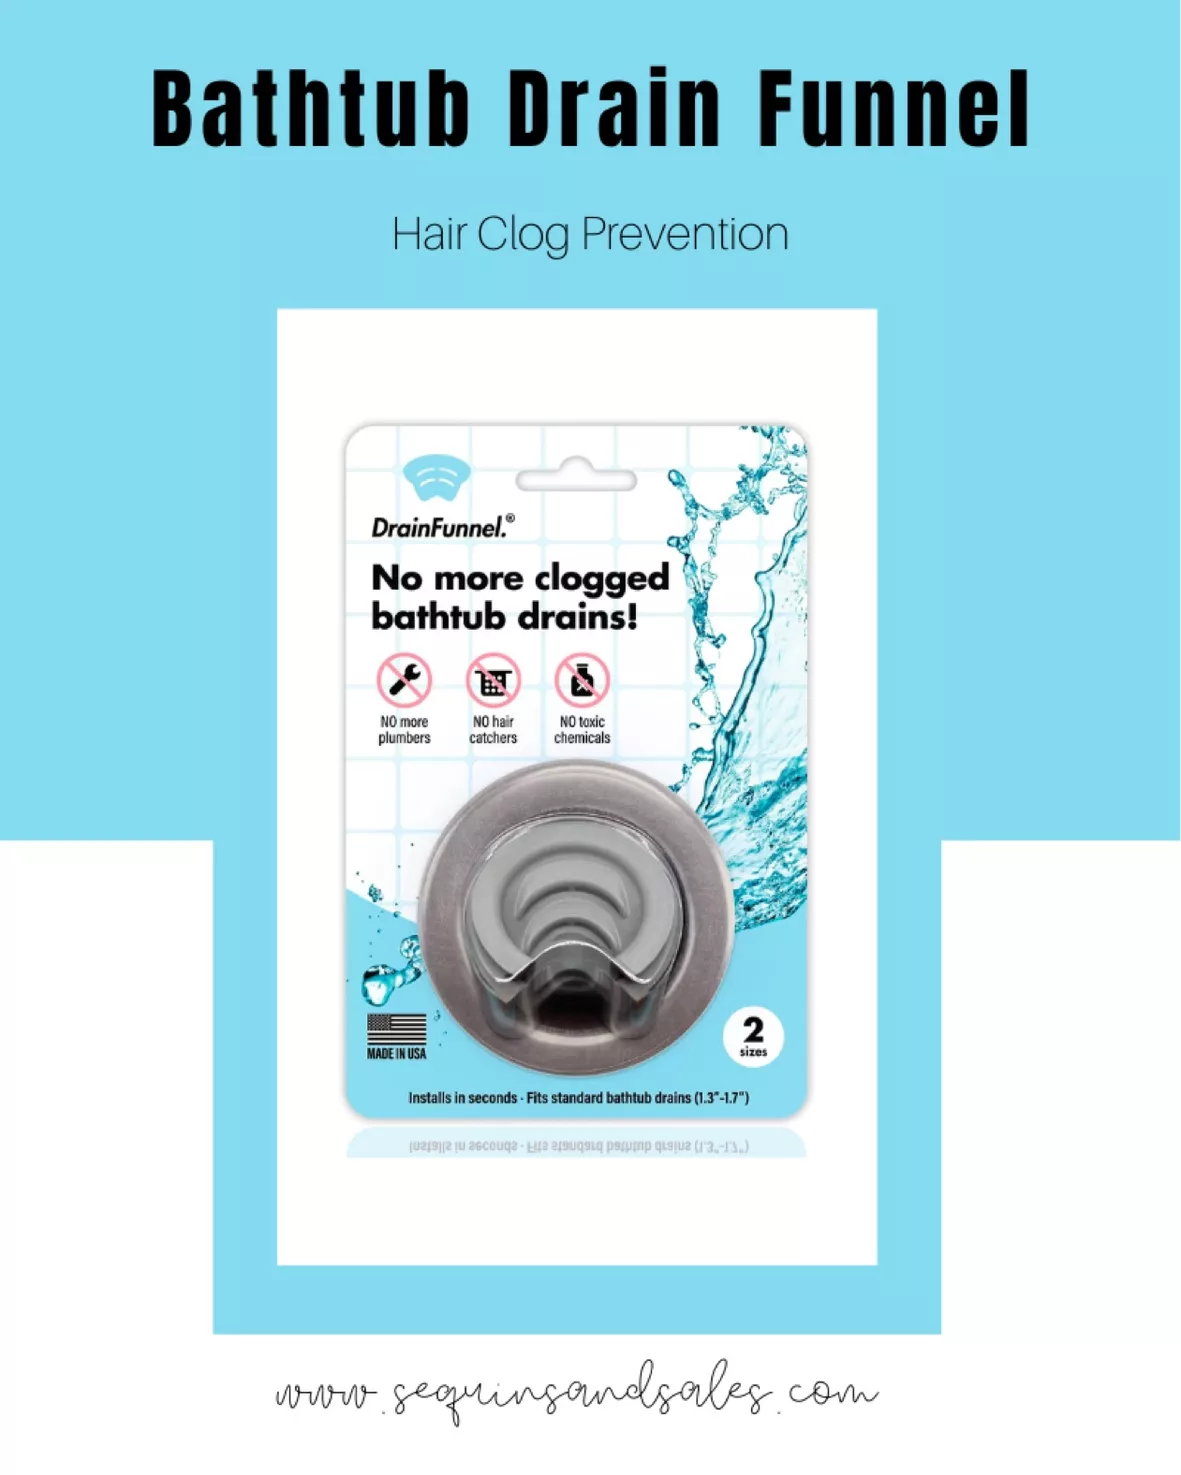 DrainFunnel Bathtub Drain Funnel for Hair Clog Prevention, 2 Size